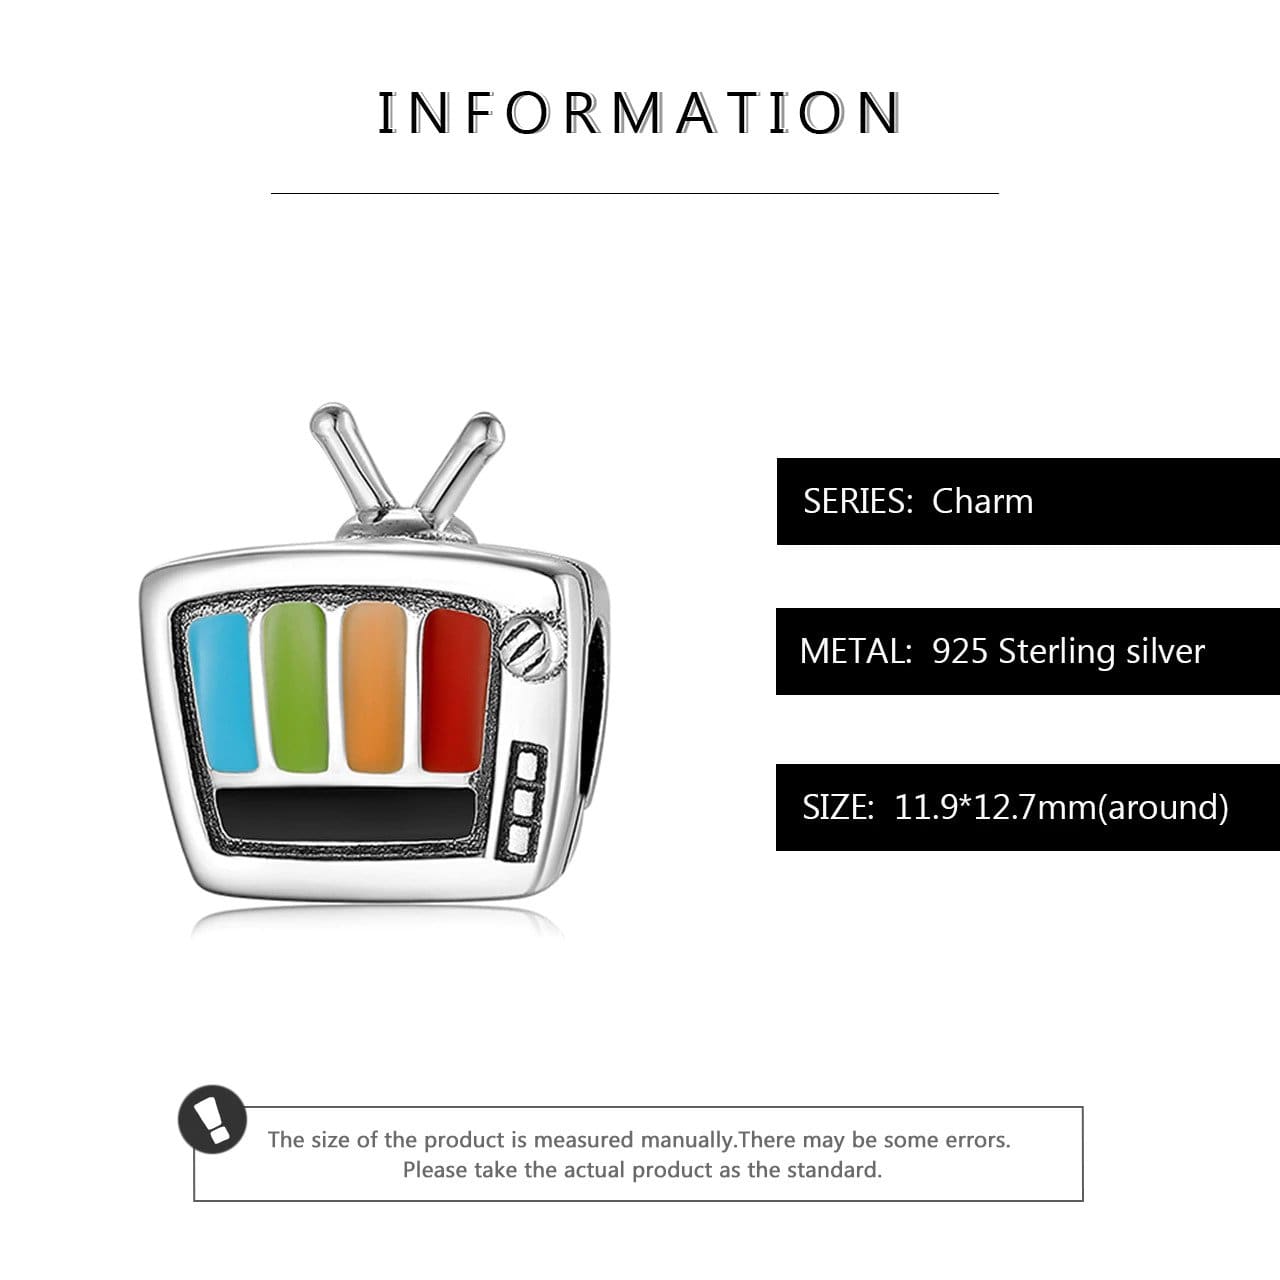 Retro TV Charm - The Silver Goose